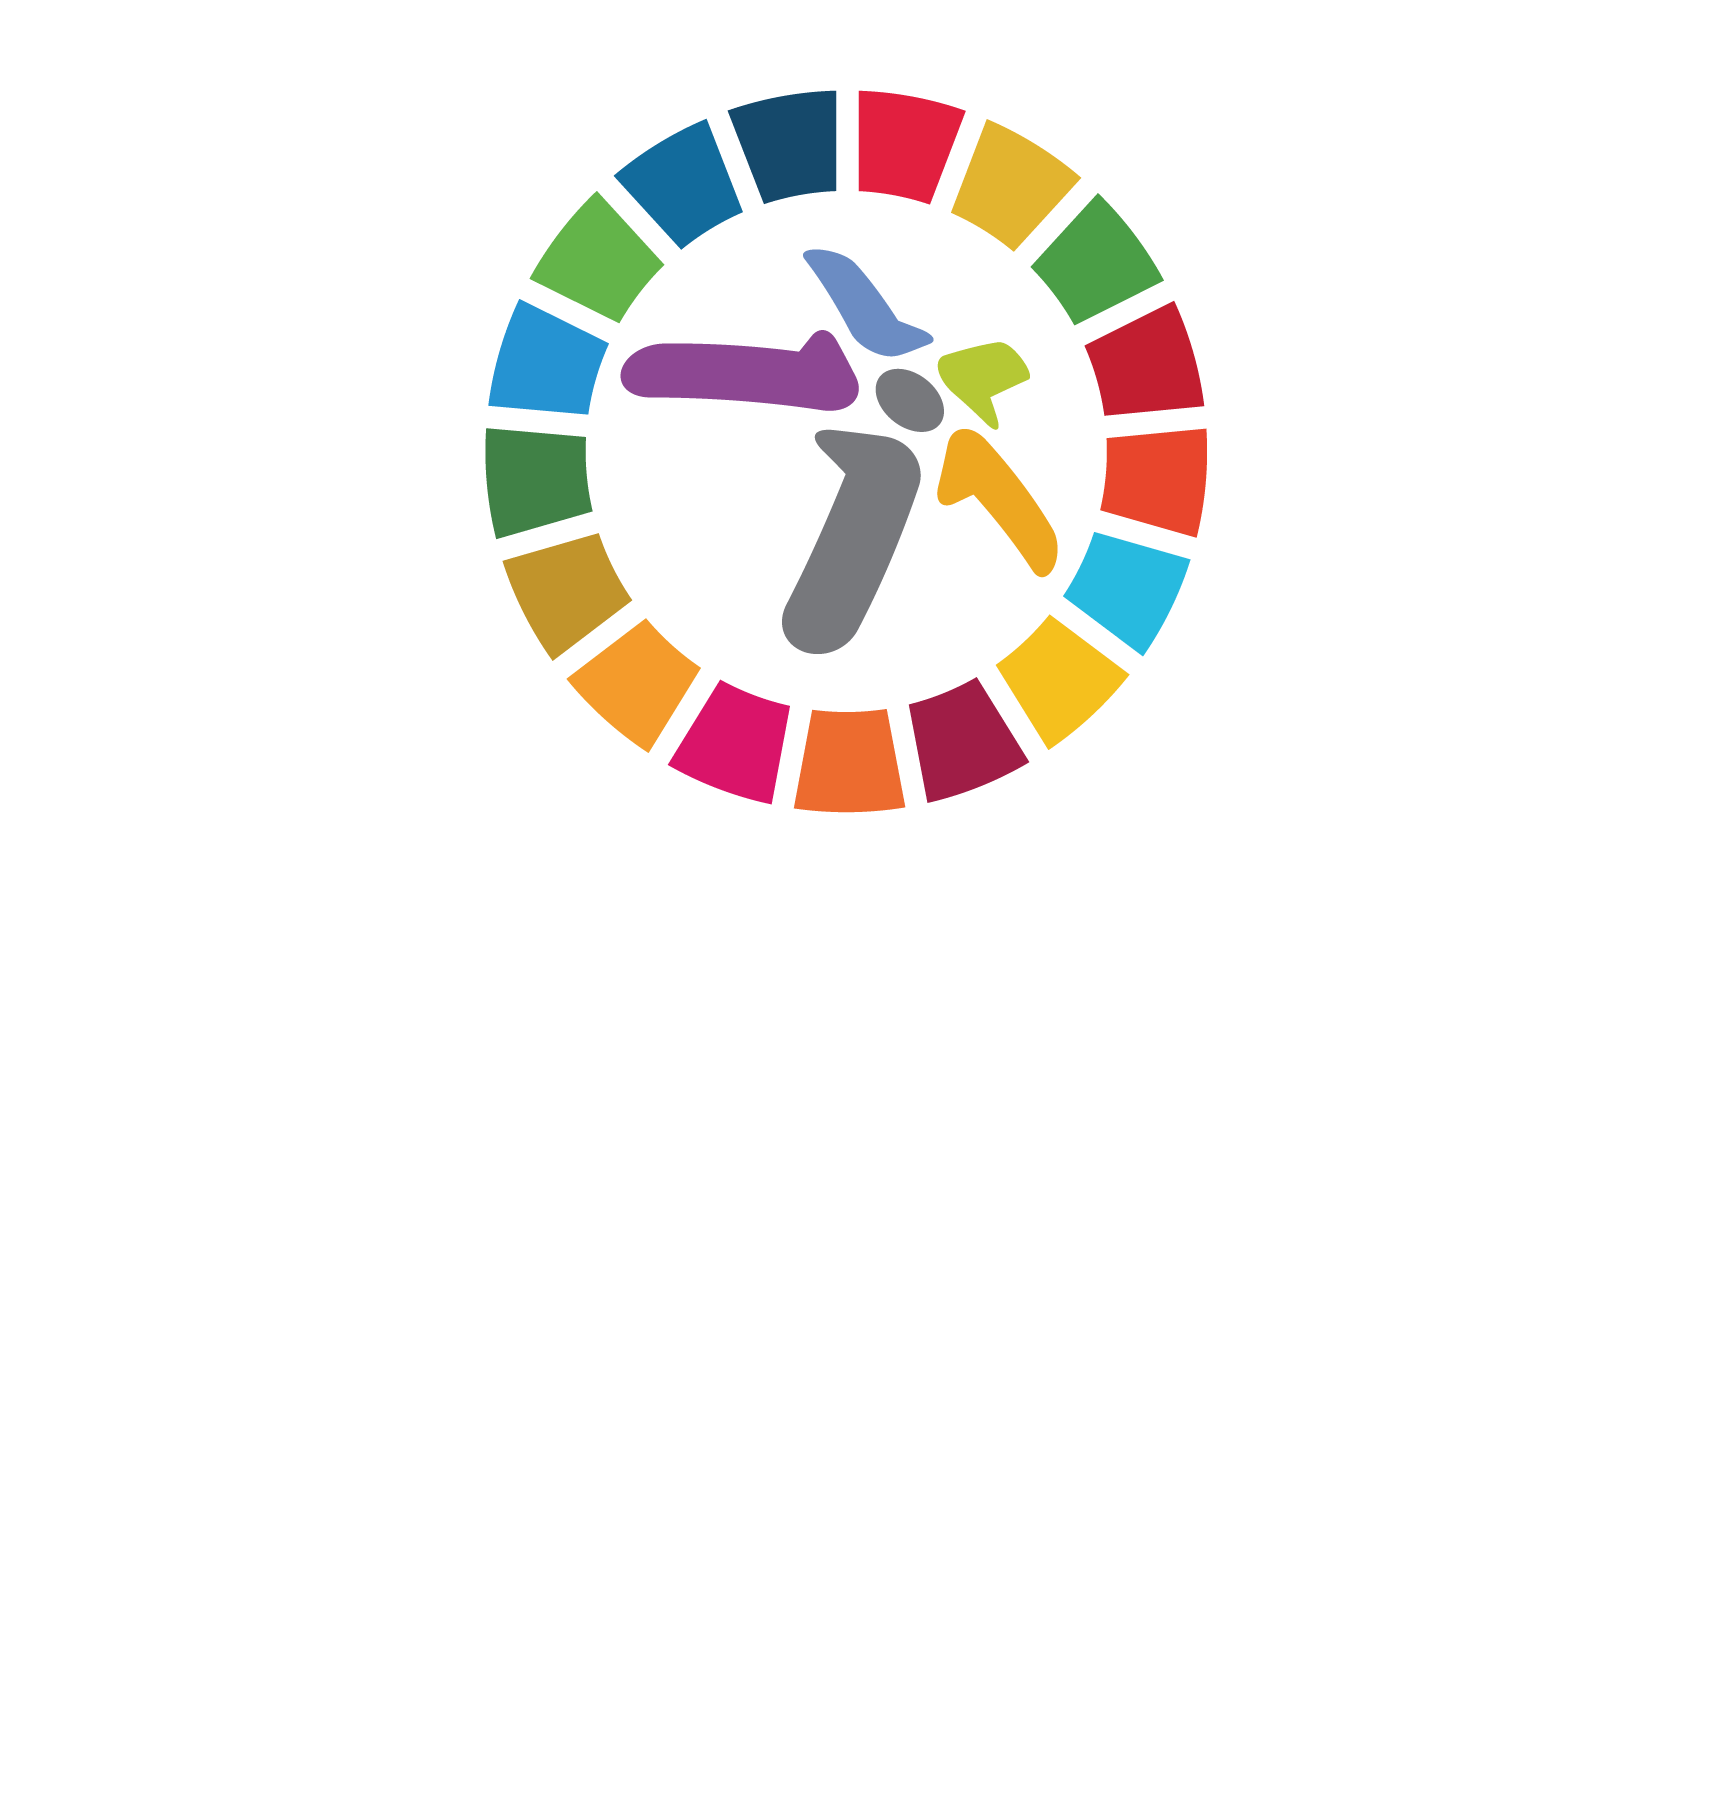 WSIS Forum 2023